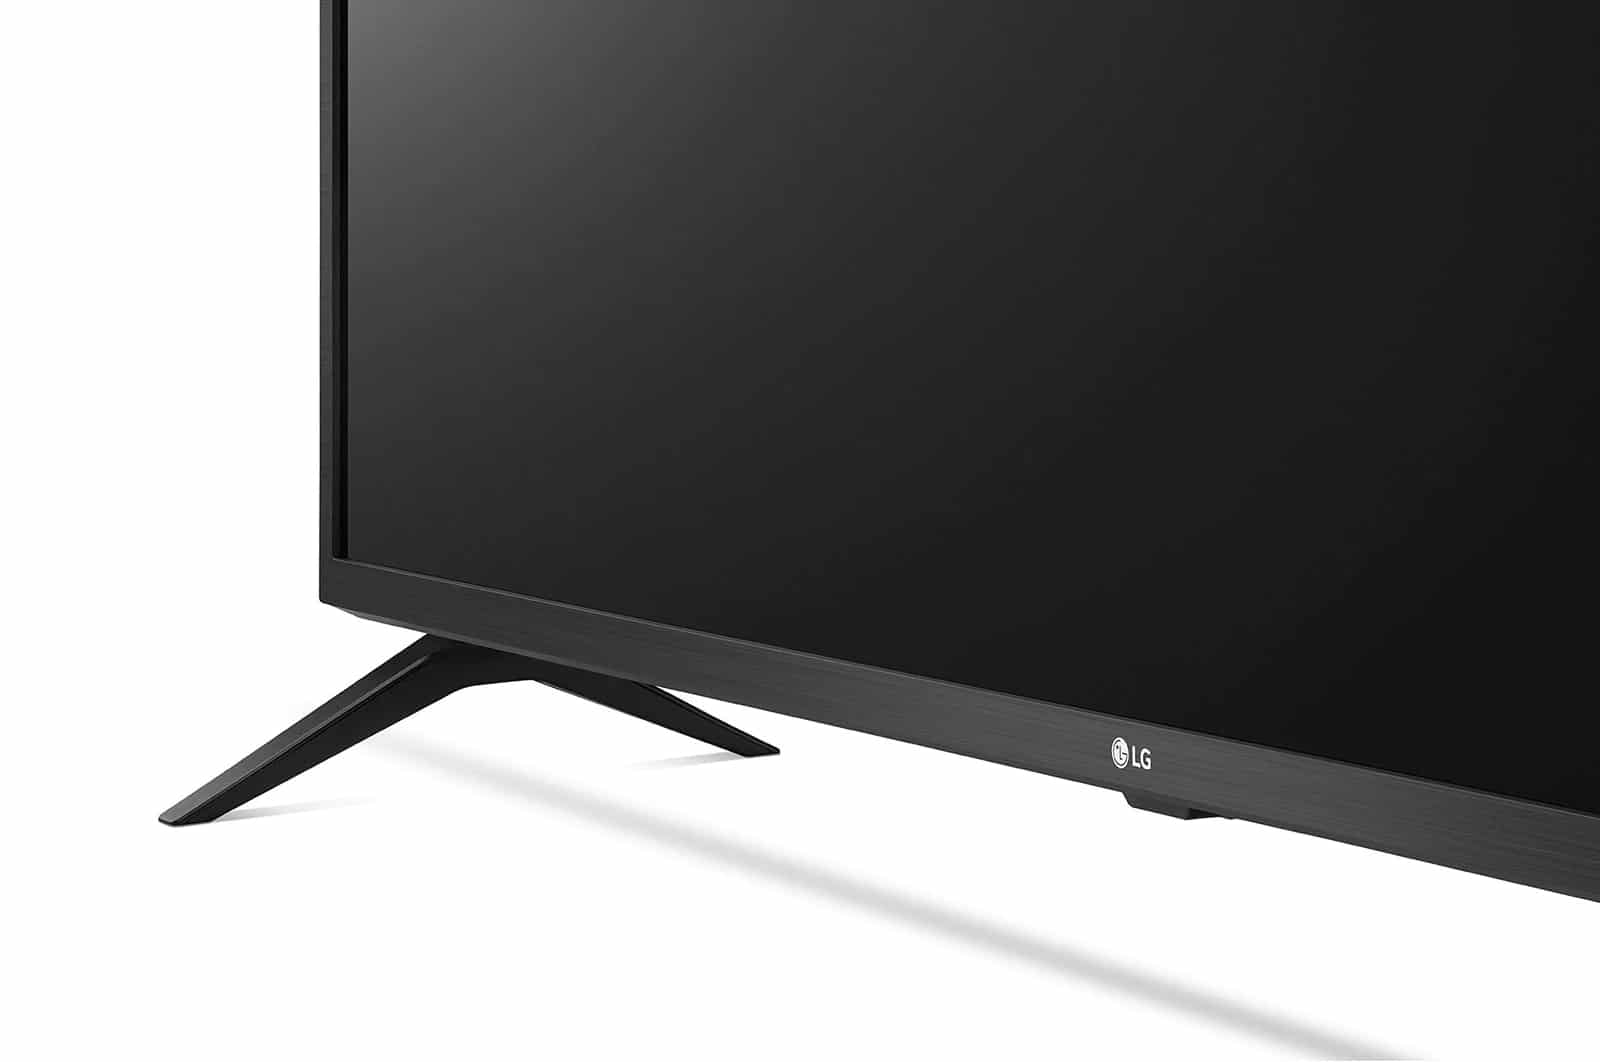 Tv Samsung de 55 pulgadas 4K ultra HD smart tv modelo UN55TU7100 Santa Cruz